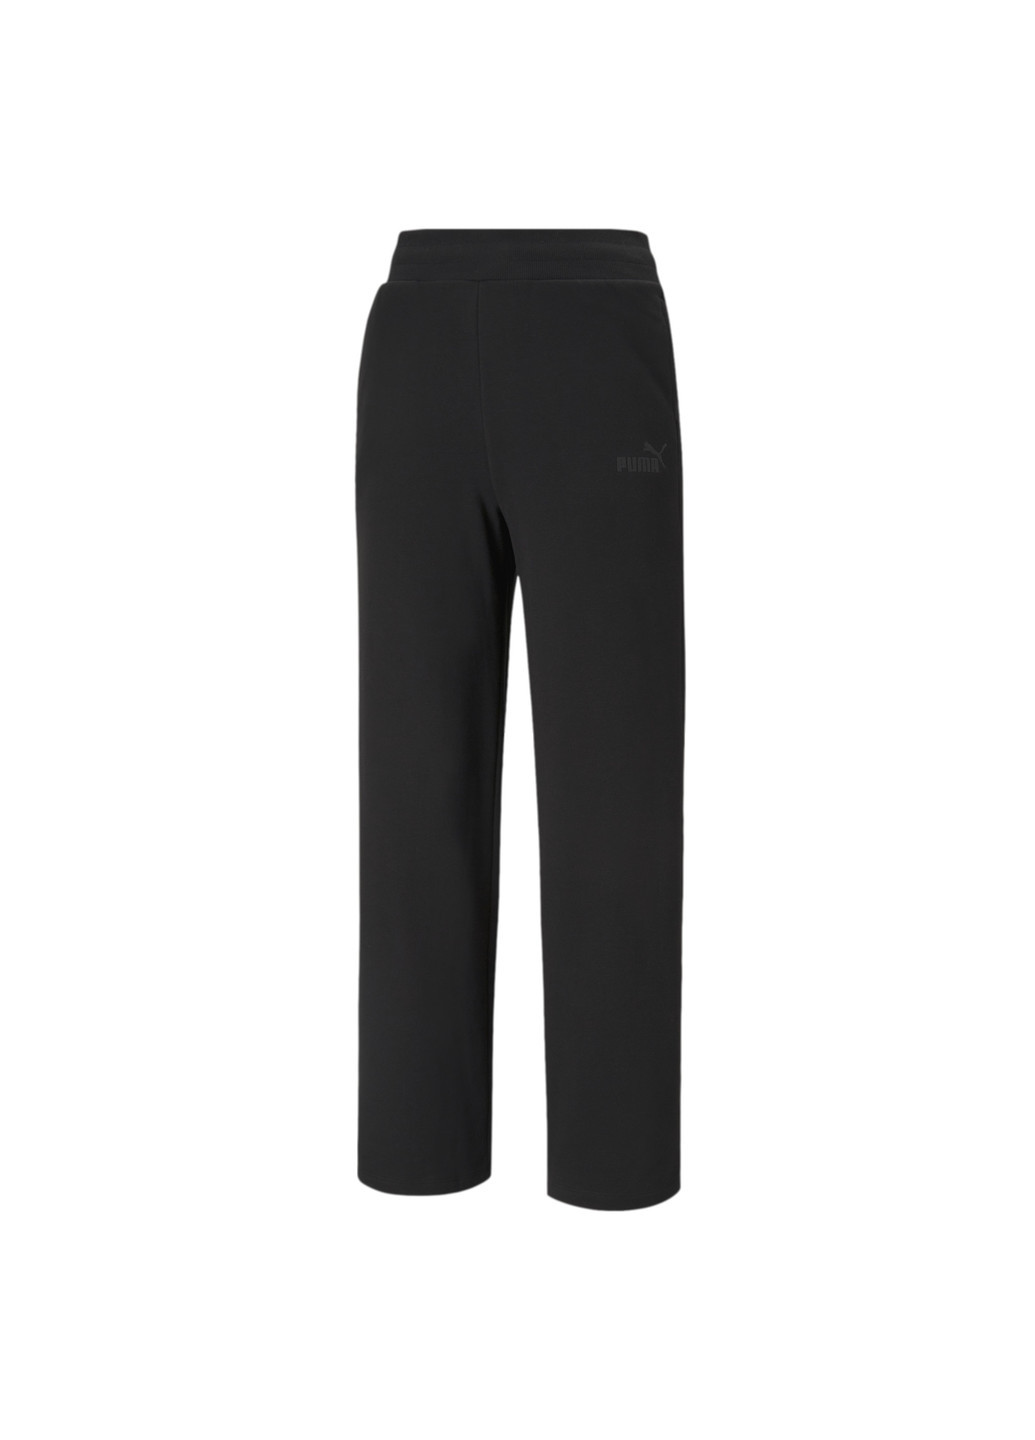 Черные демисезонные штаны essentials embroidered women's wide pants Puma